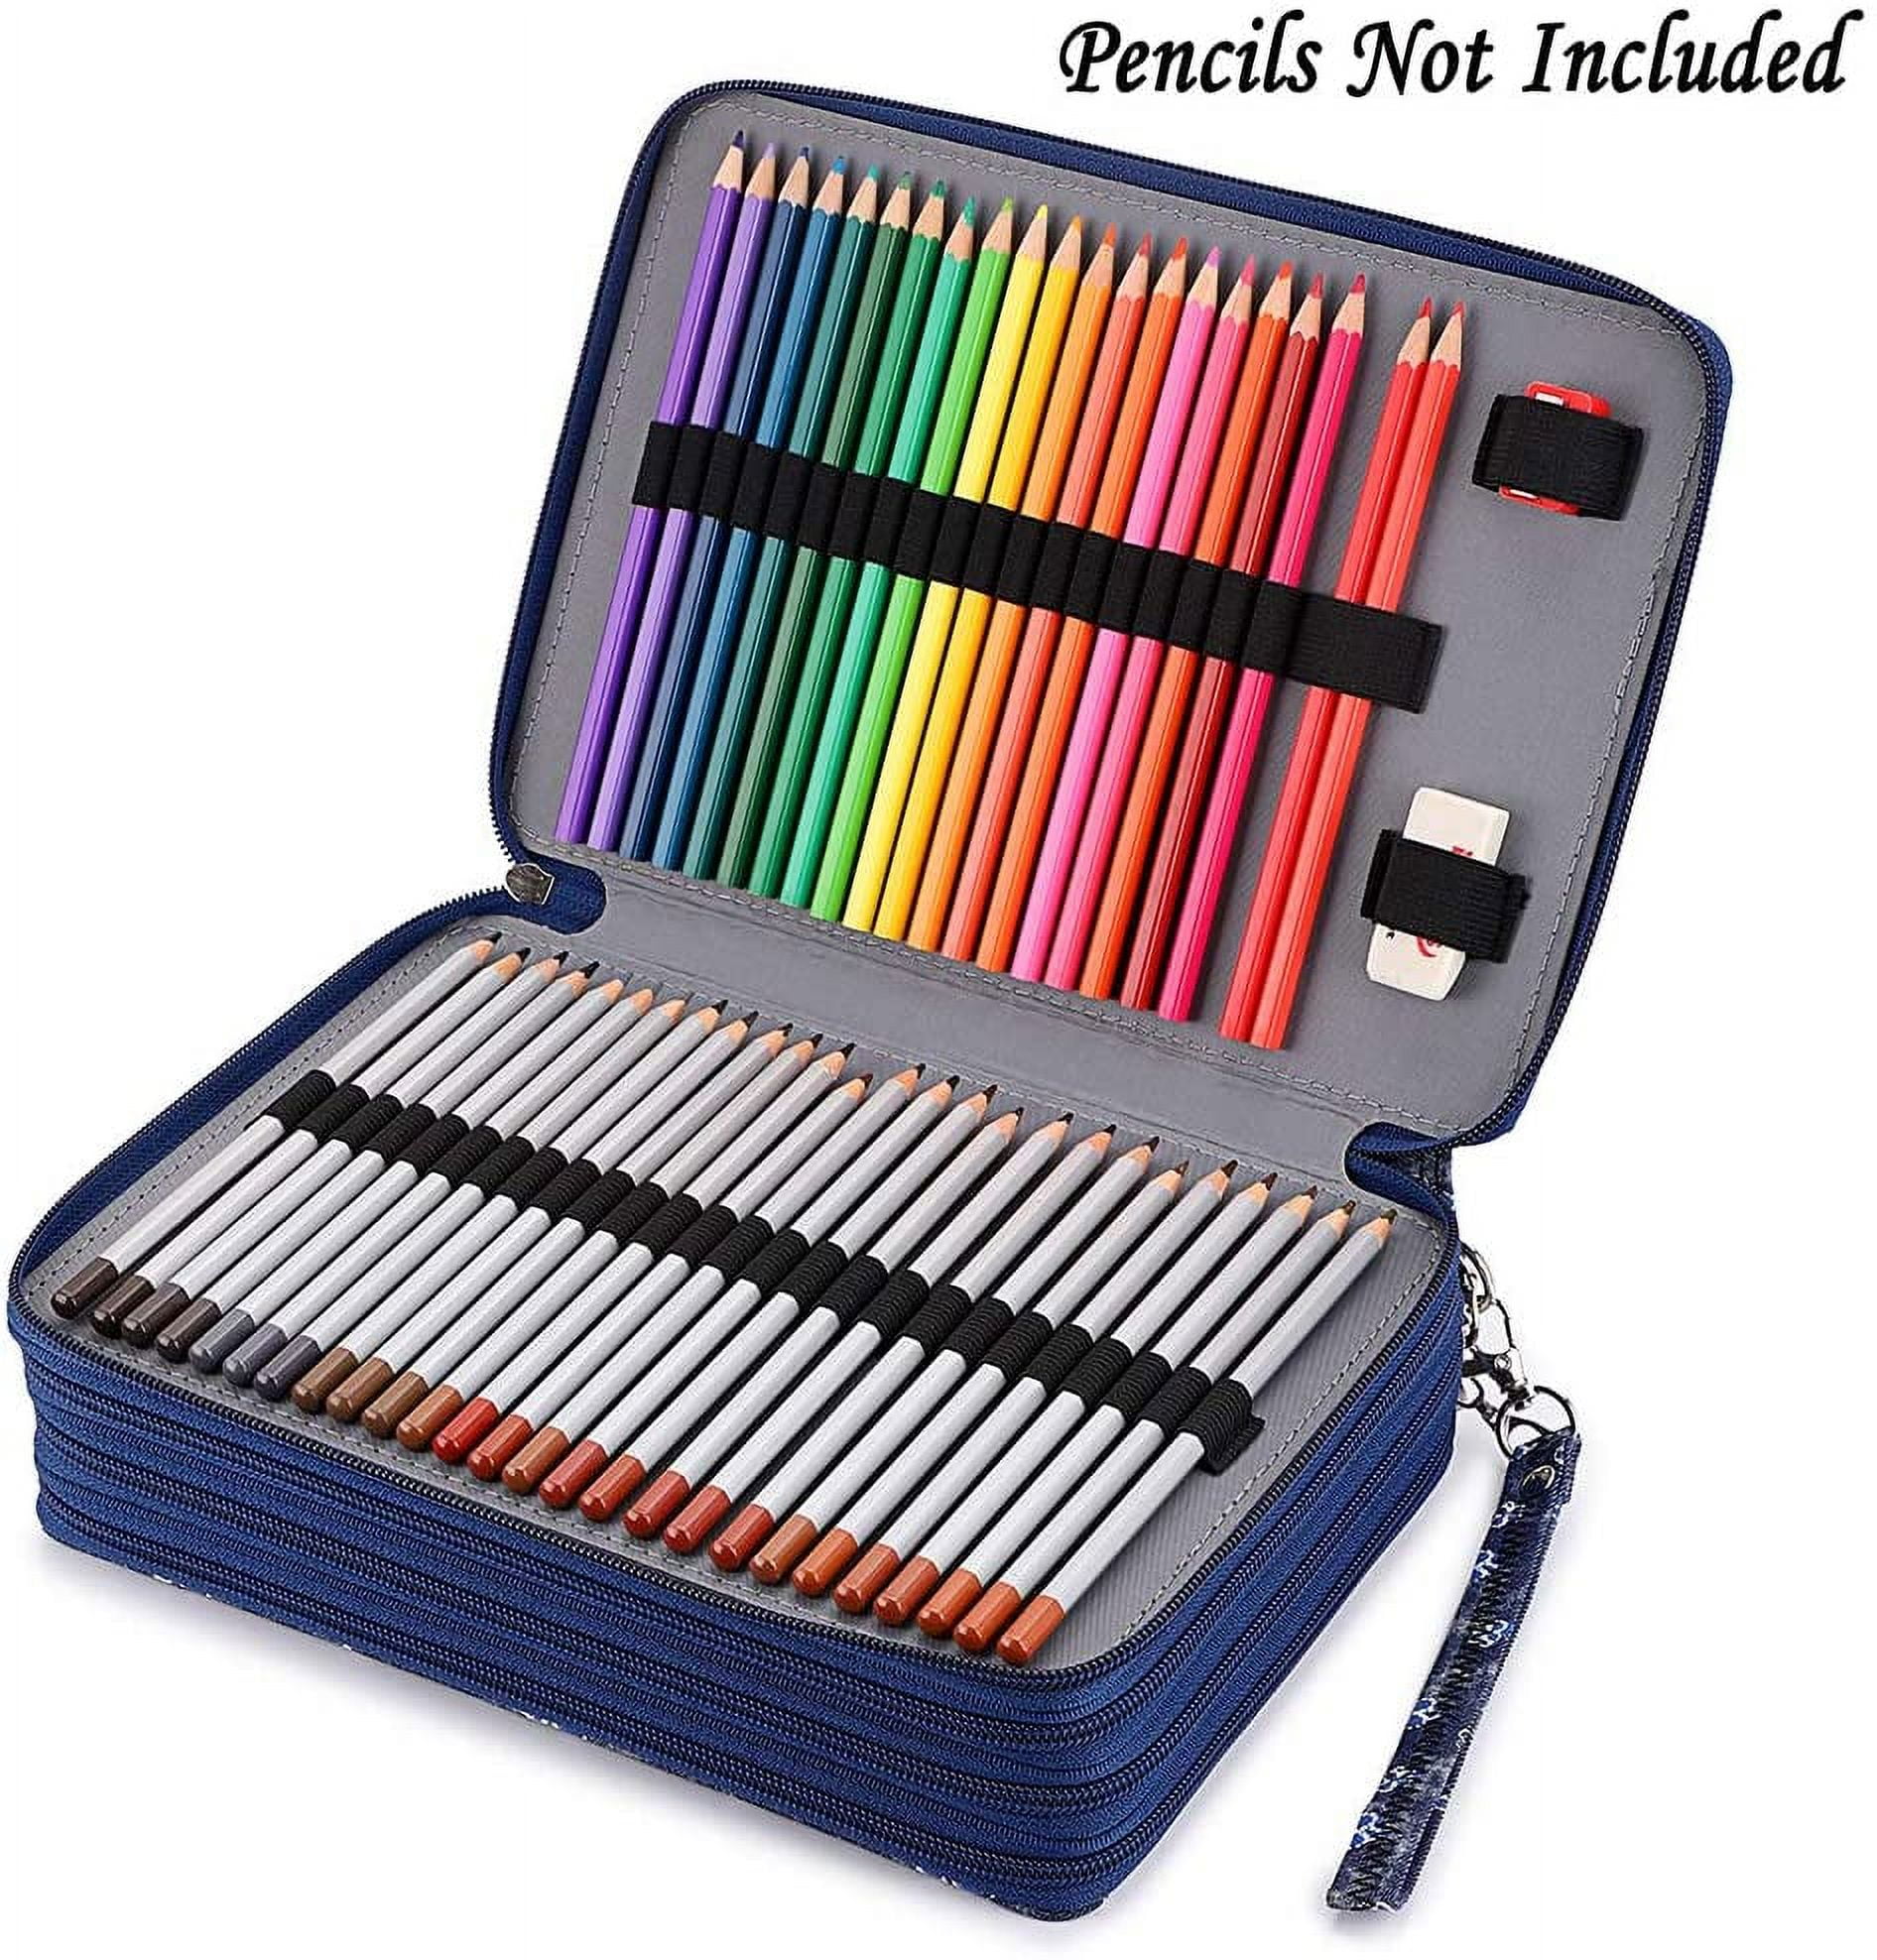 Big Capacity Colored Pencil Case - 480 Slots large Pen Case